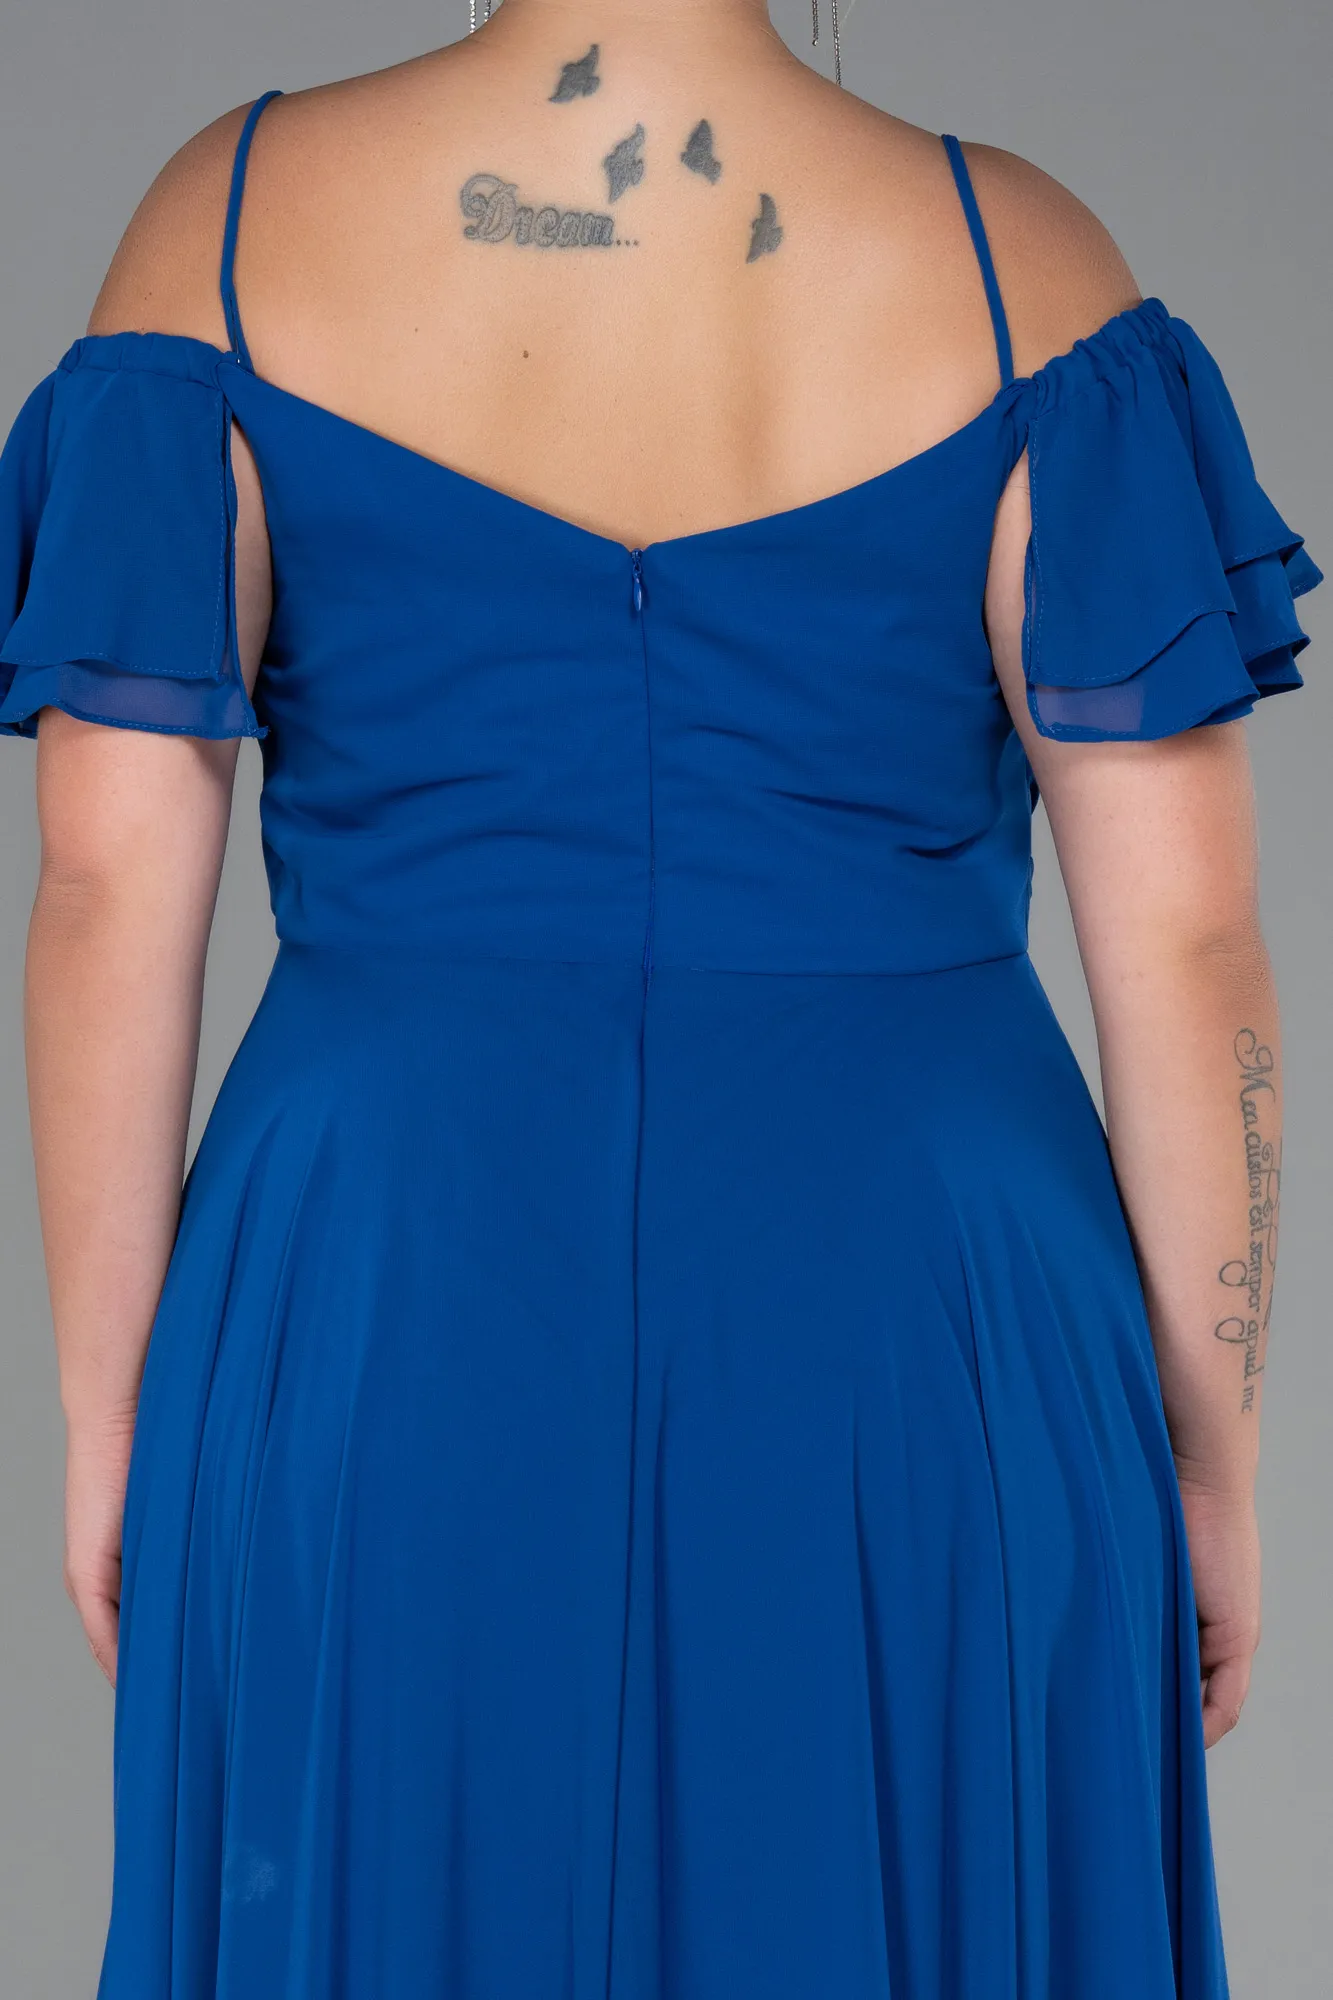 Sax Blue-Long Chiffon Plus Size Evening Dress ABU3259